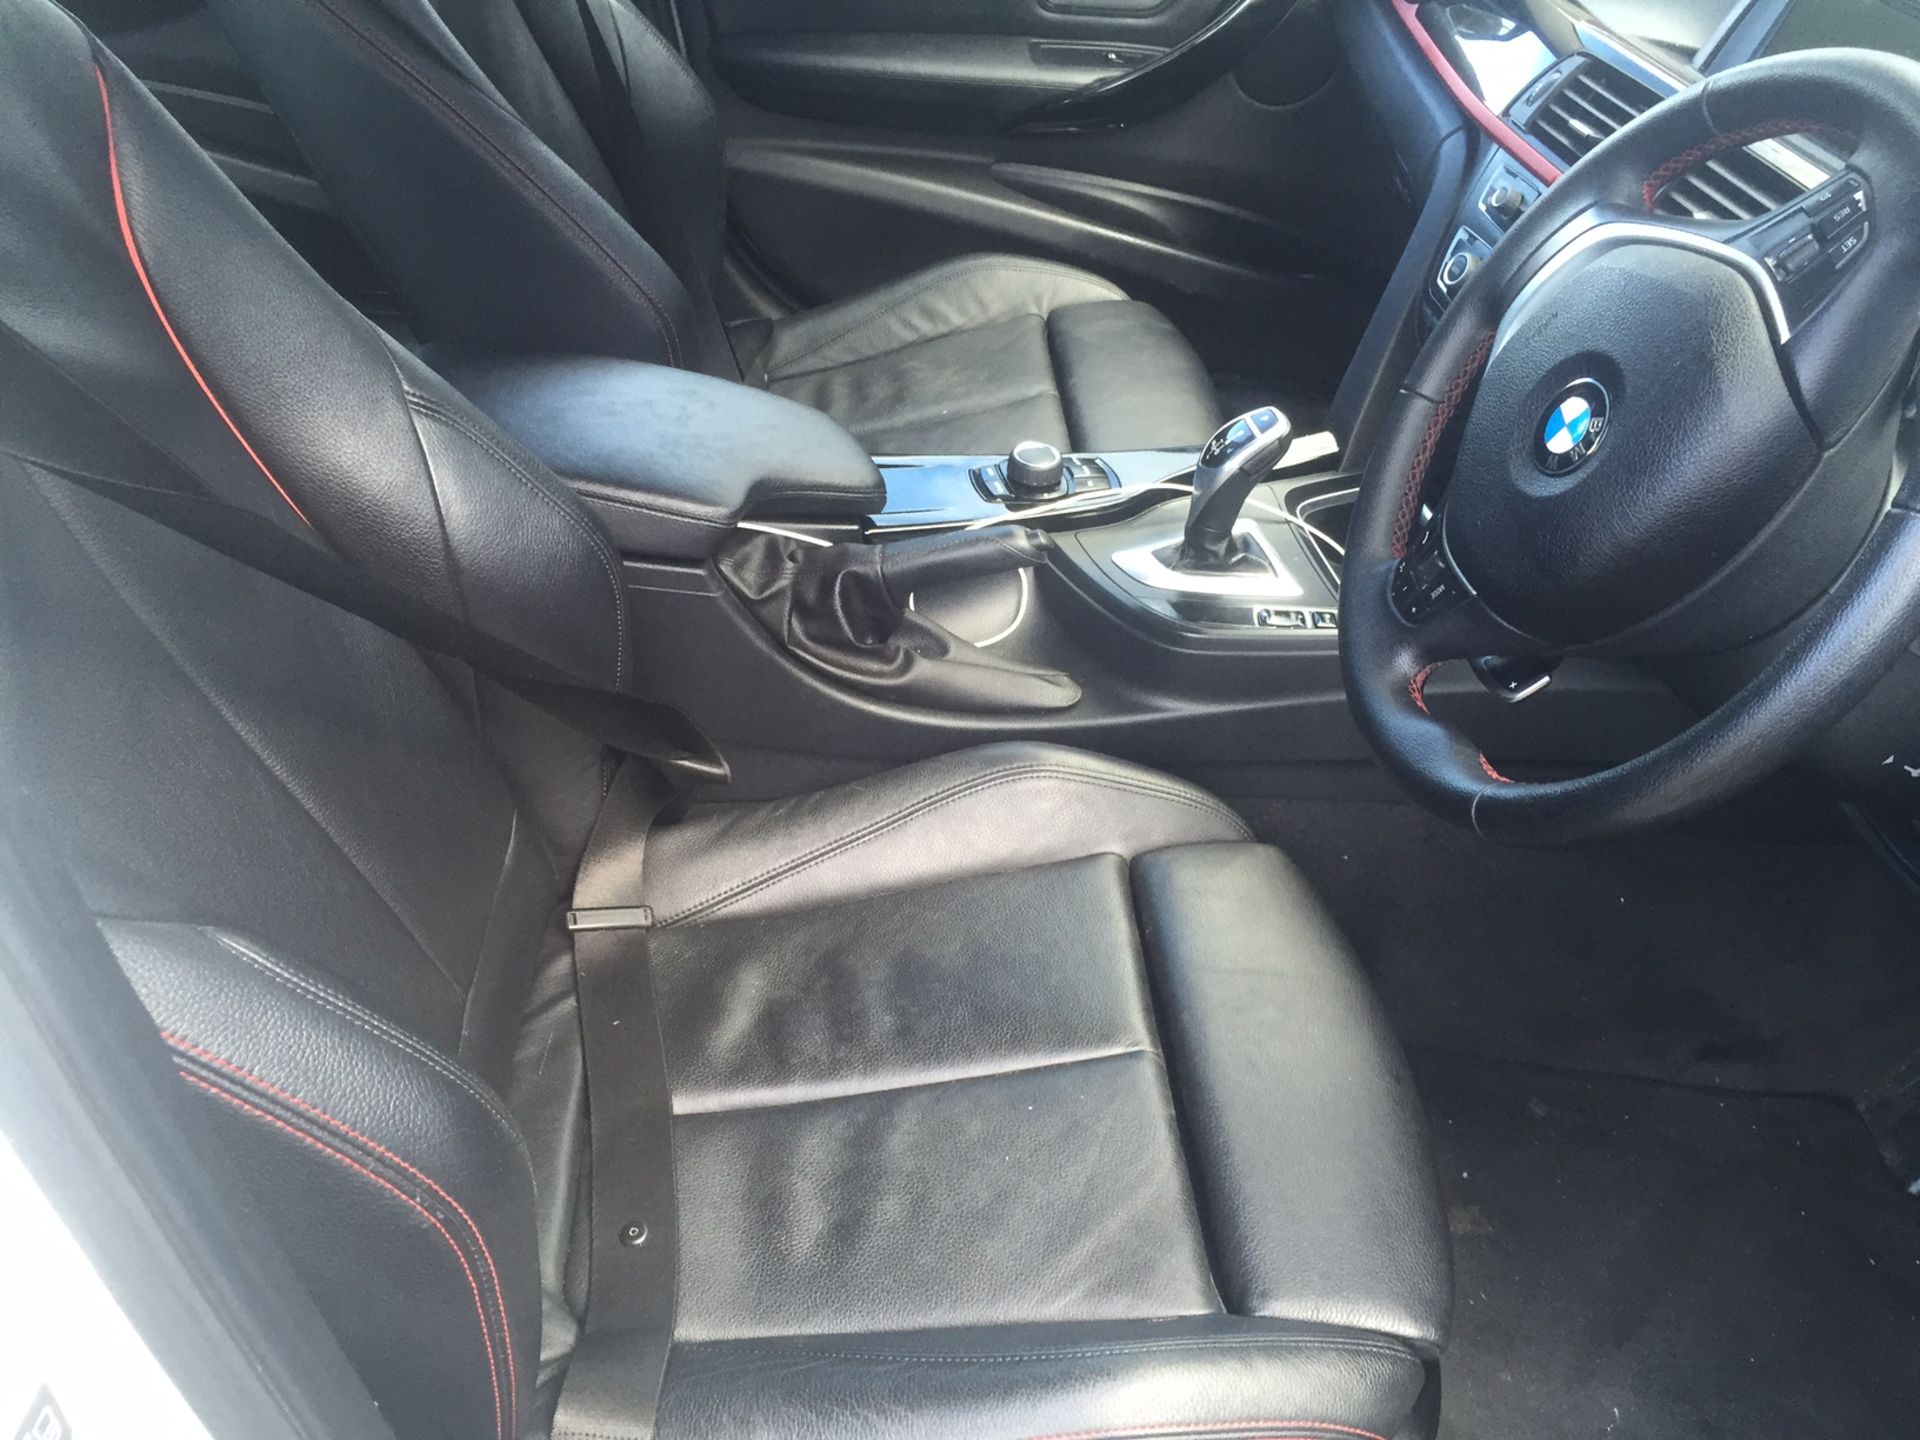 2013/13 REG BMW 320M SPORT 4 DOOR FULL SPEC AUTO 6CD CHANGER CLIMATE CONTROL FULL LEATHER *NO VAT* - Image 9 of 15